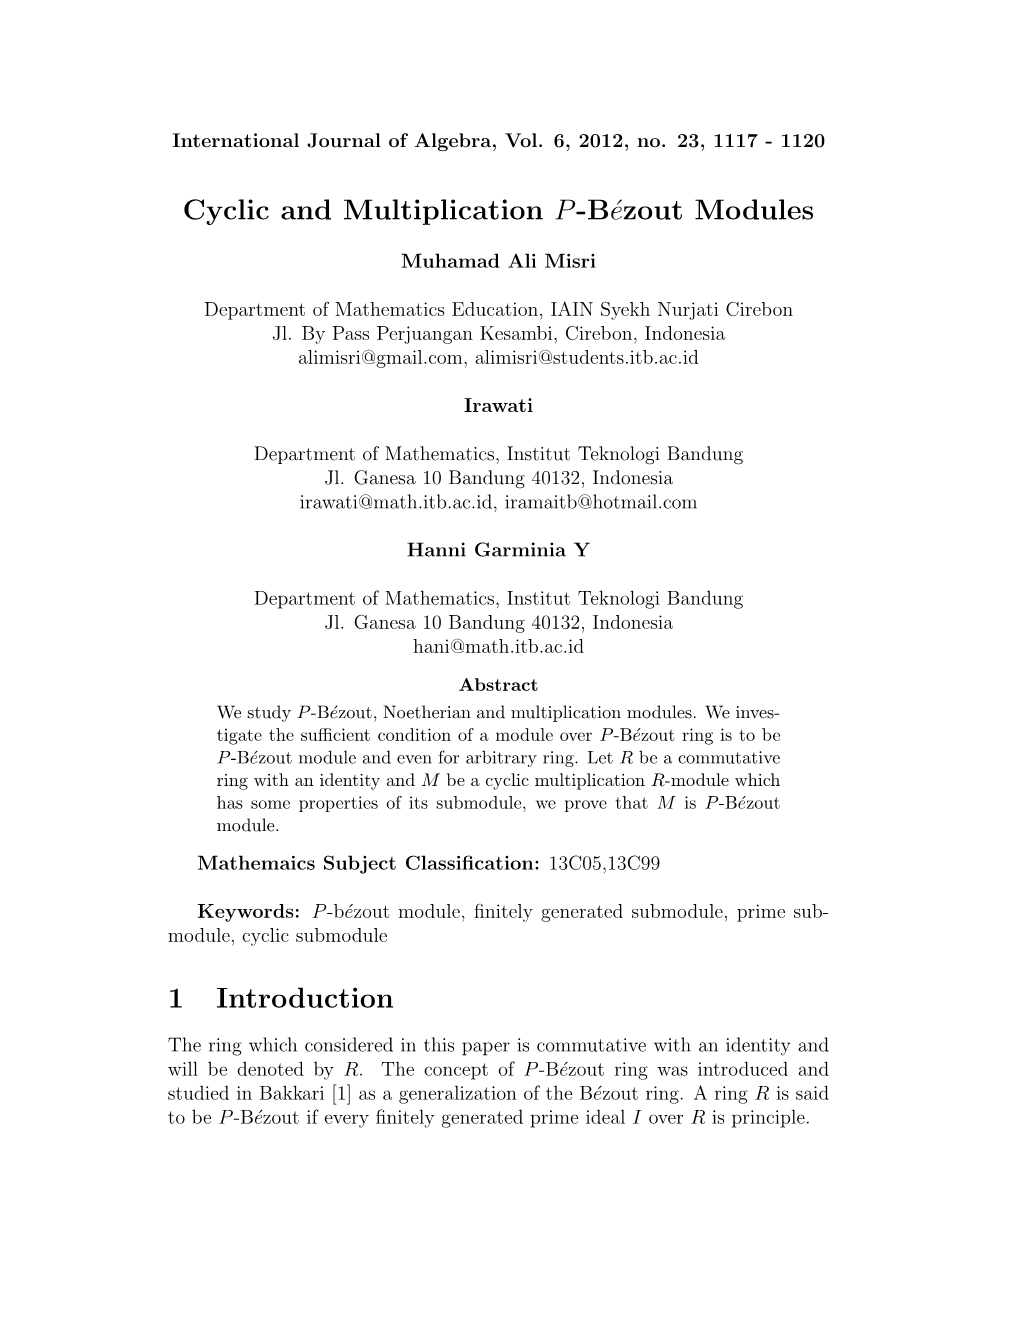 Cyclic and Multiplication P-Bezout Modules